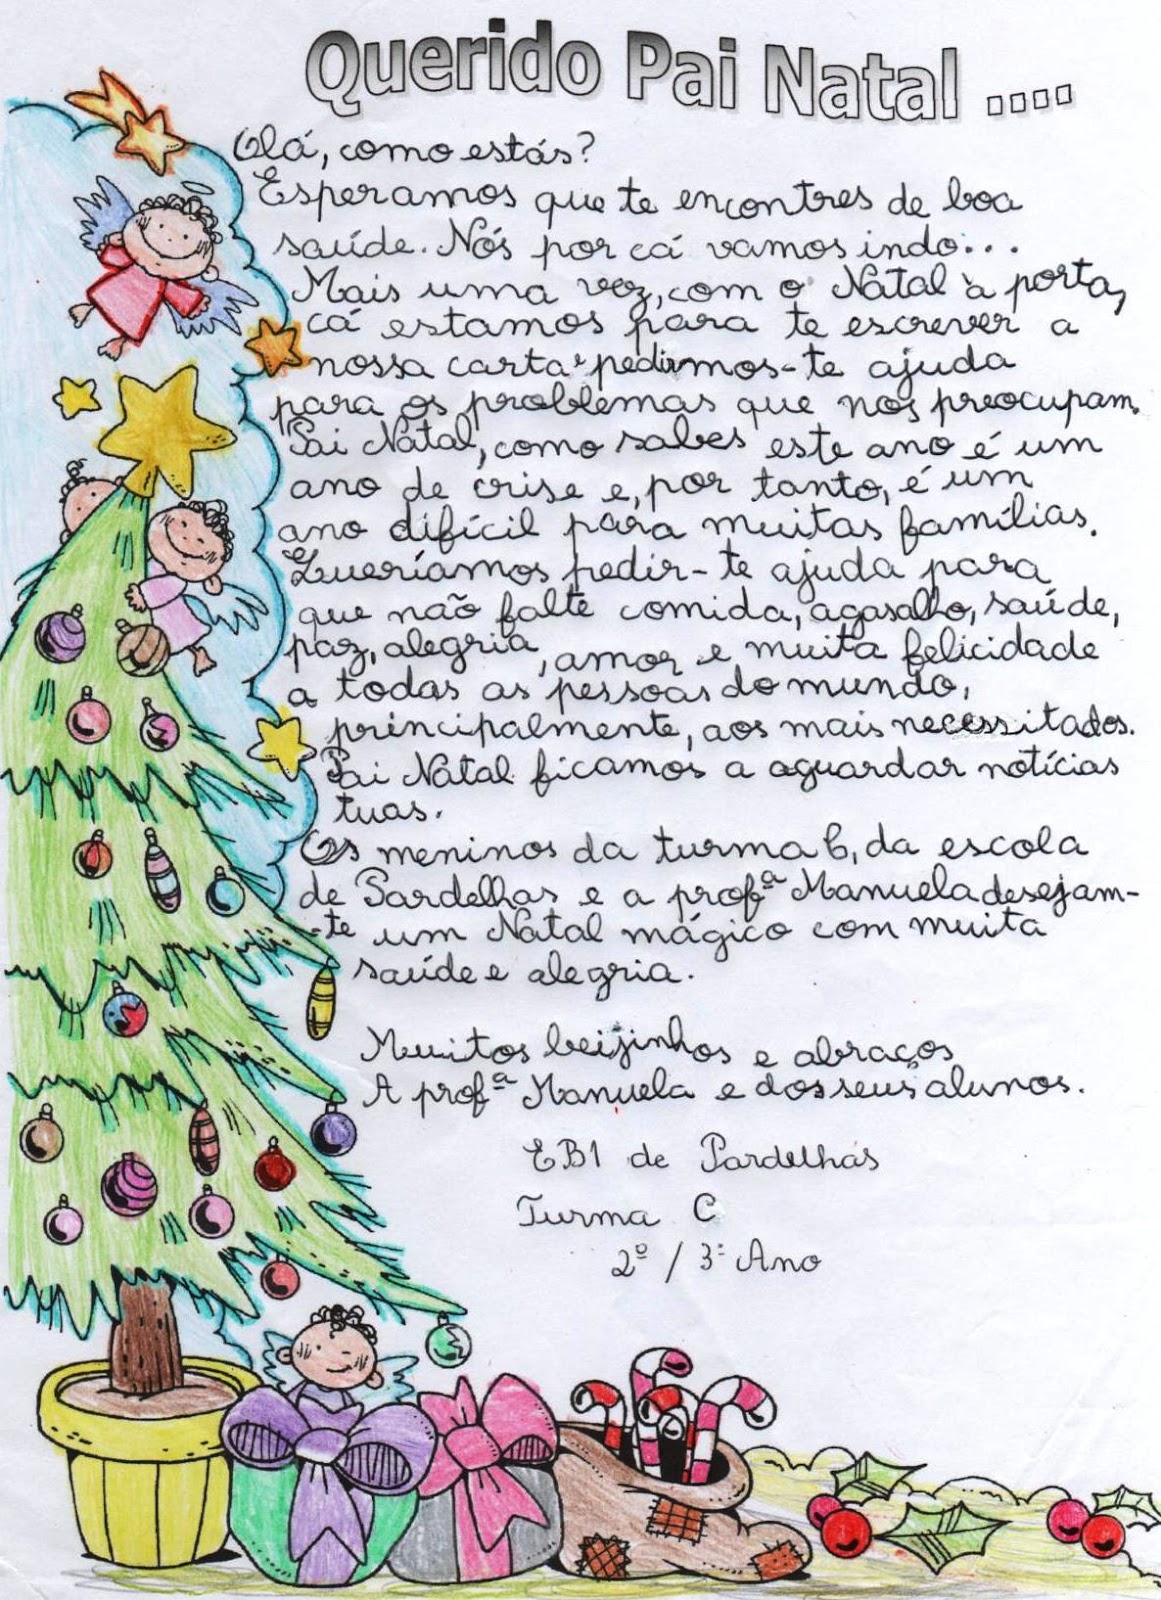 Turma dos 25: Carta ao Pai Natal